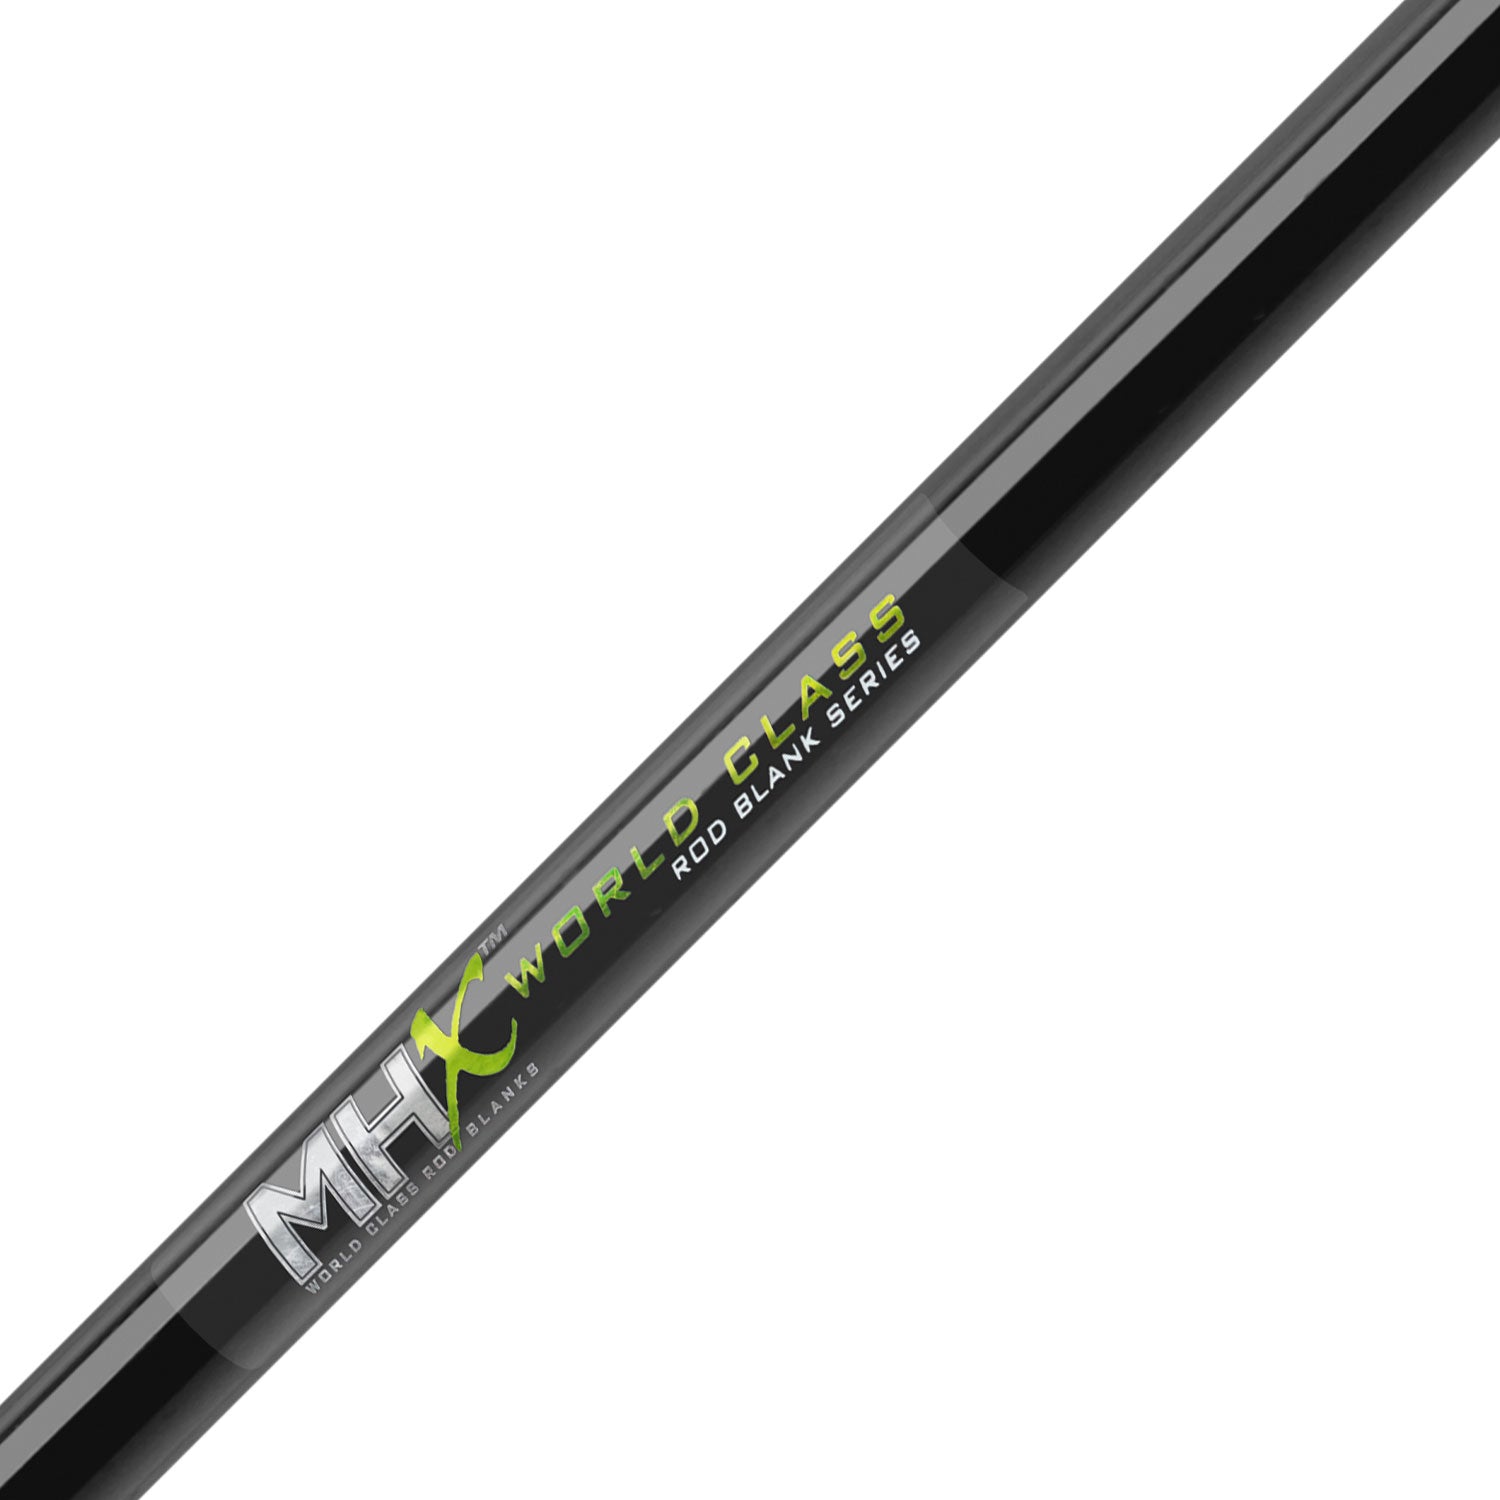 MHX 7'6 Med-Heavy Light Saltwater Rod Blank - L904